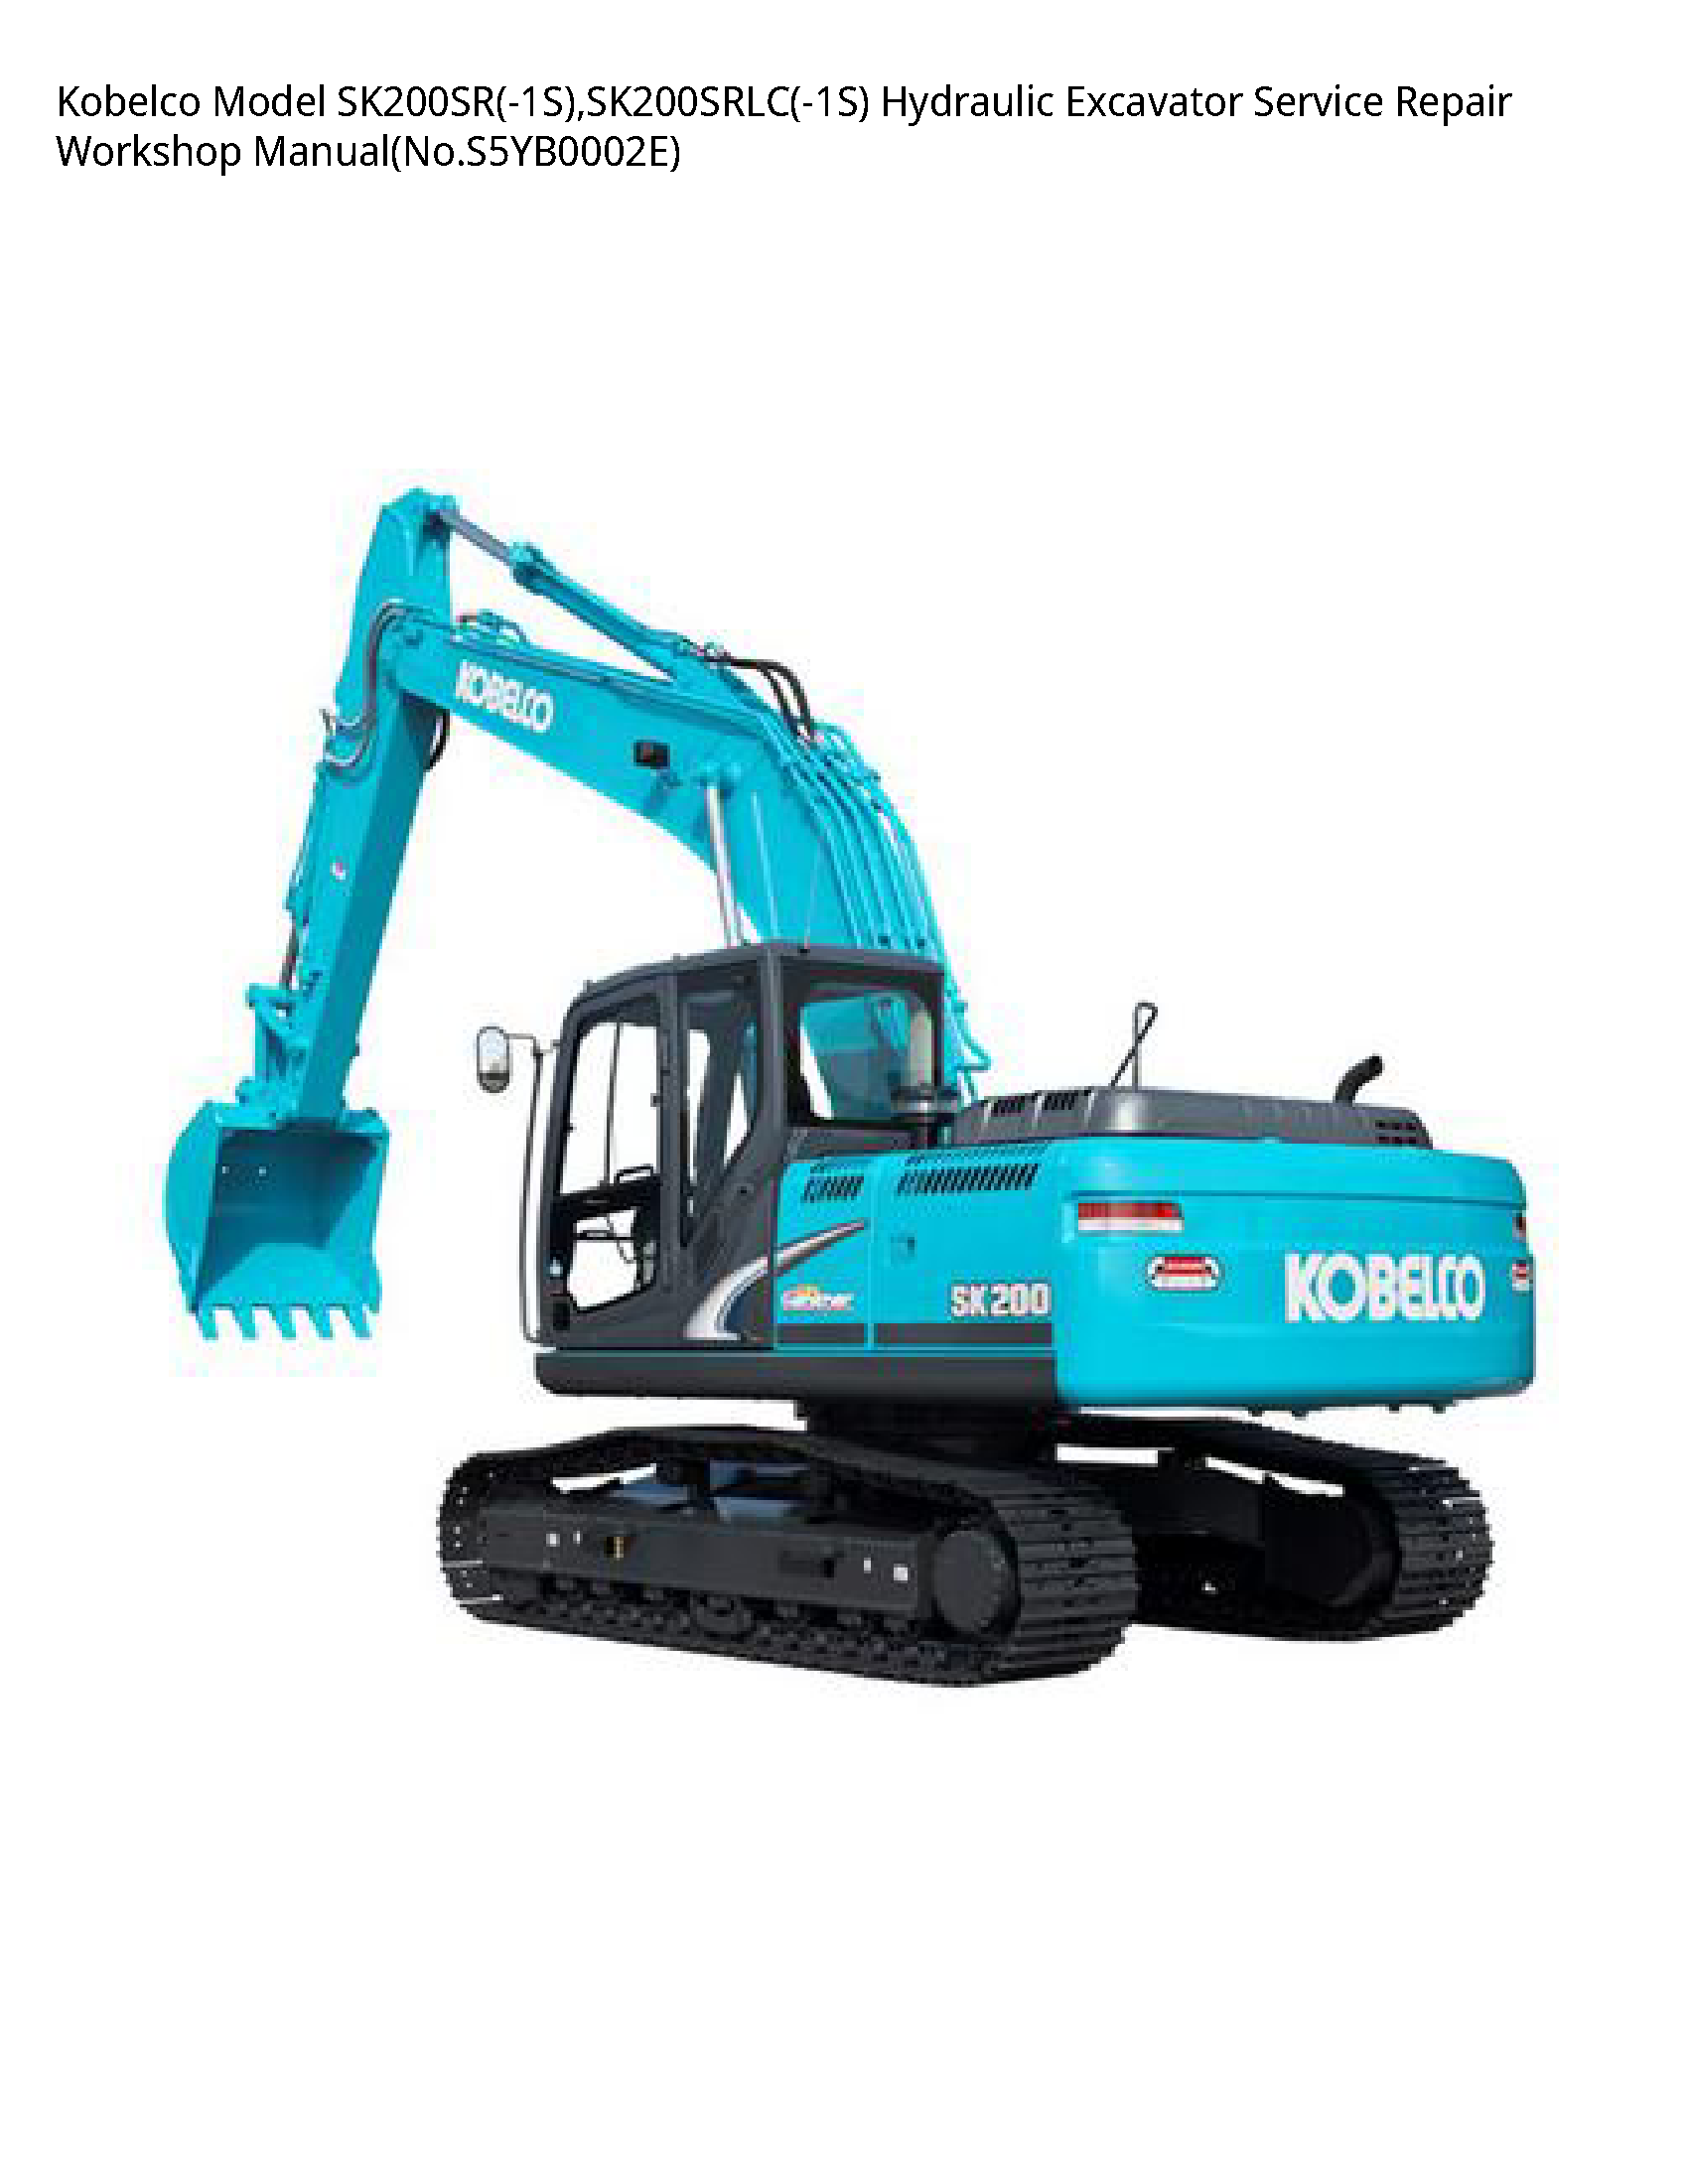 Kobelco SK200SR-1S Model Hydraulic Excavator manual